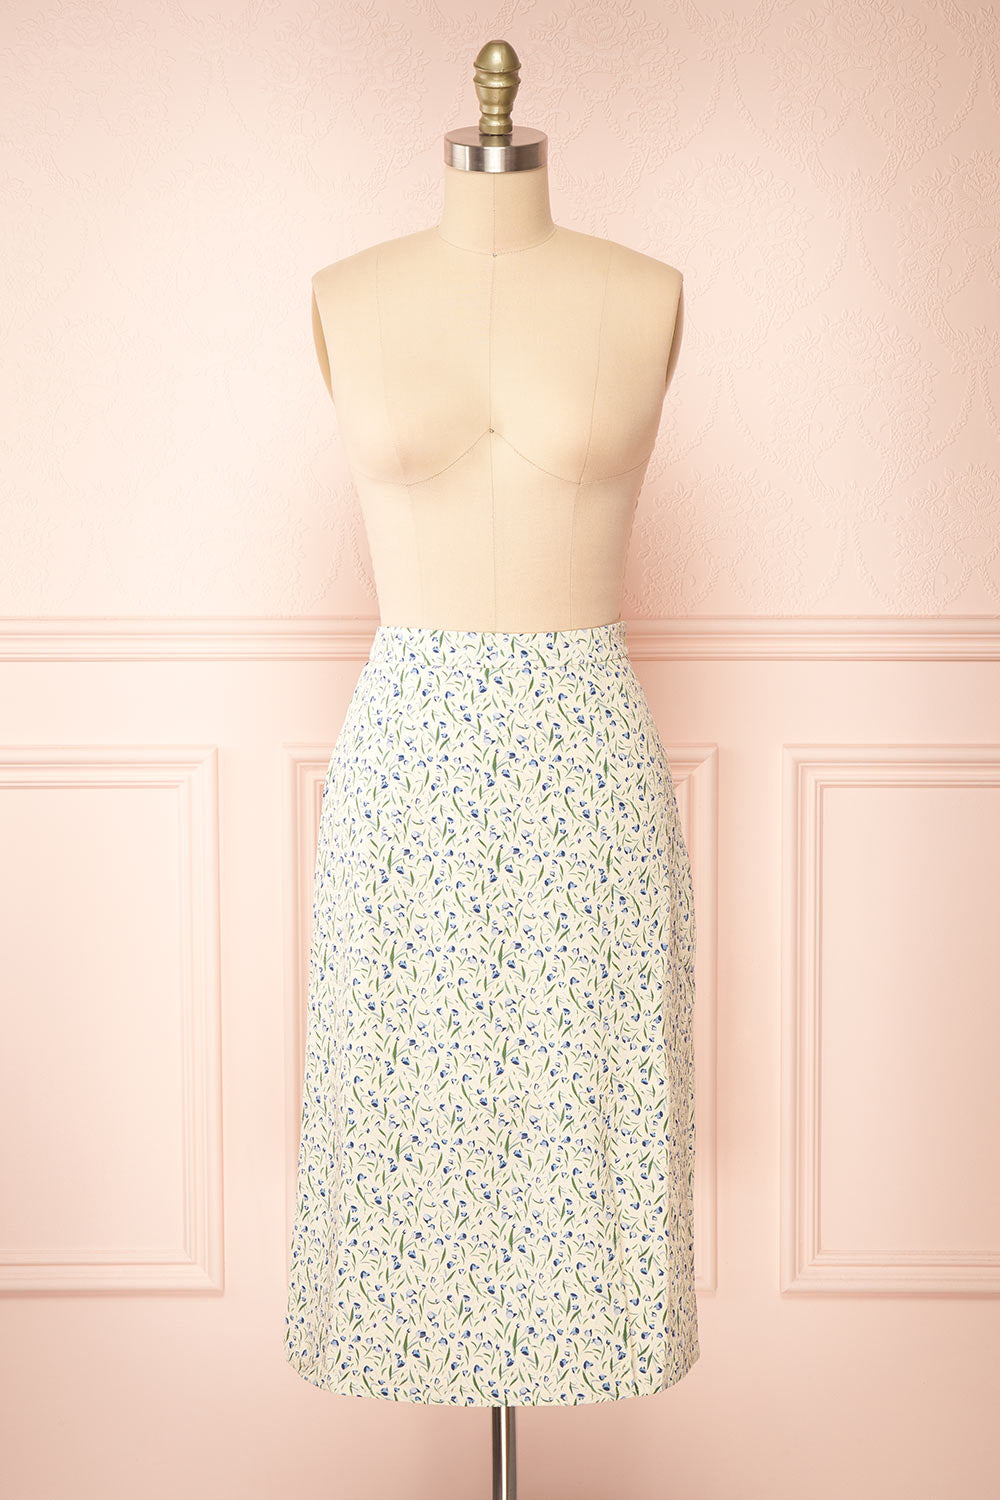 Zowie Midi A-Line Blue Floral Skirt w/ Slit | Boutique 1861 front view